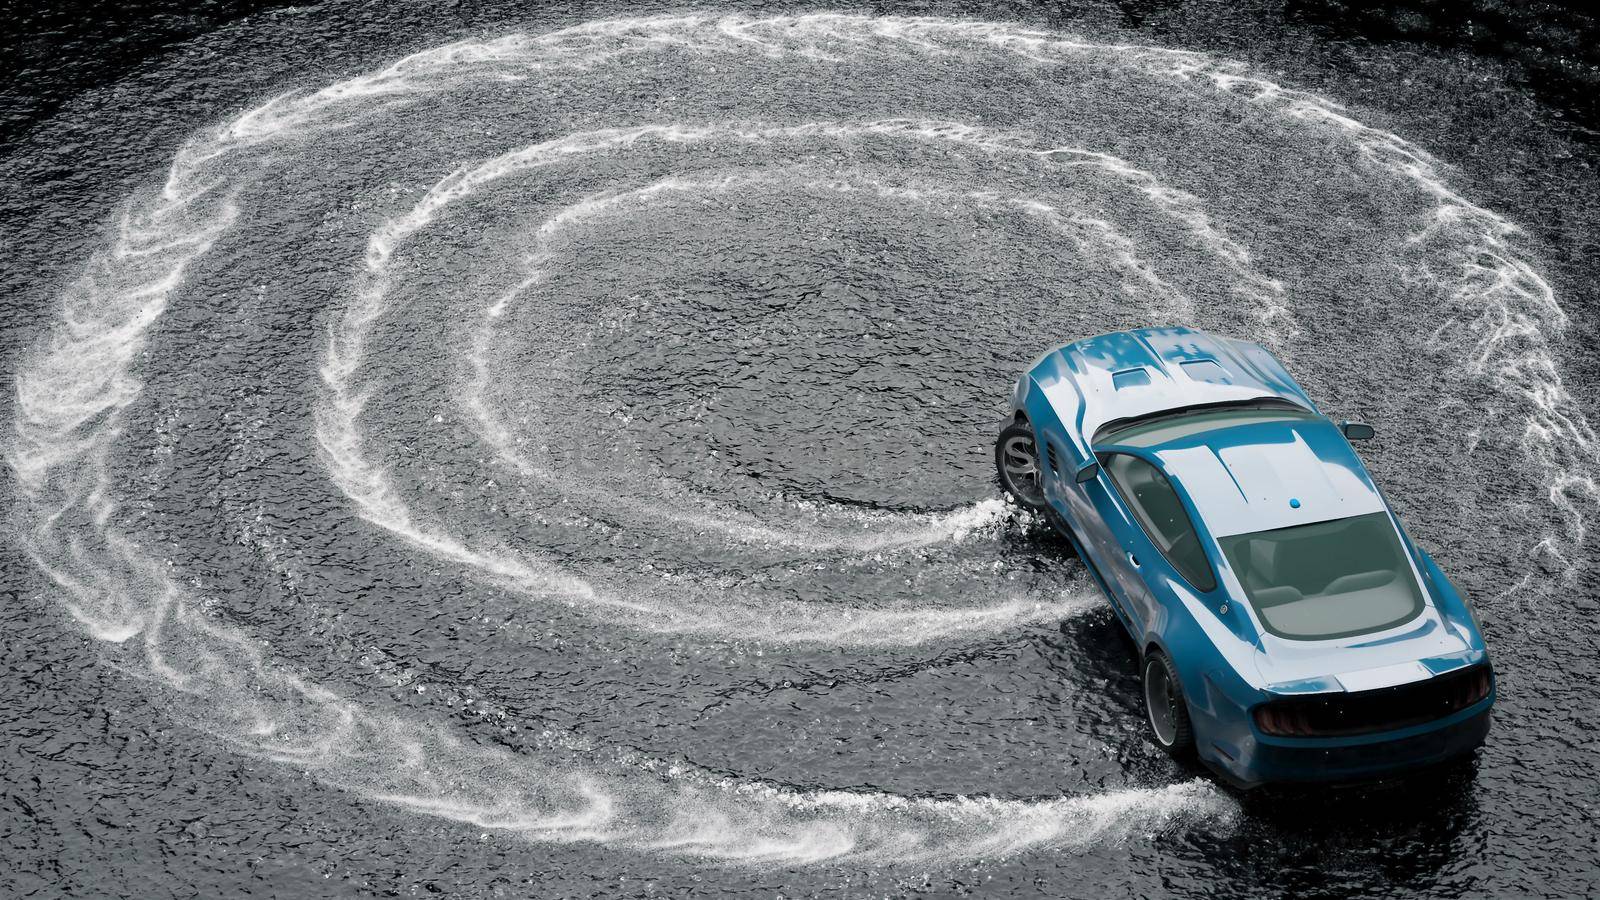 Drift sports car on water on wet asphalt. Splash and foam from rotating wheels.